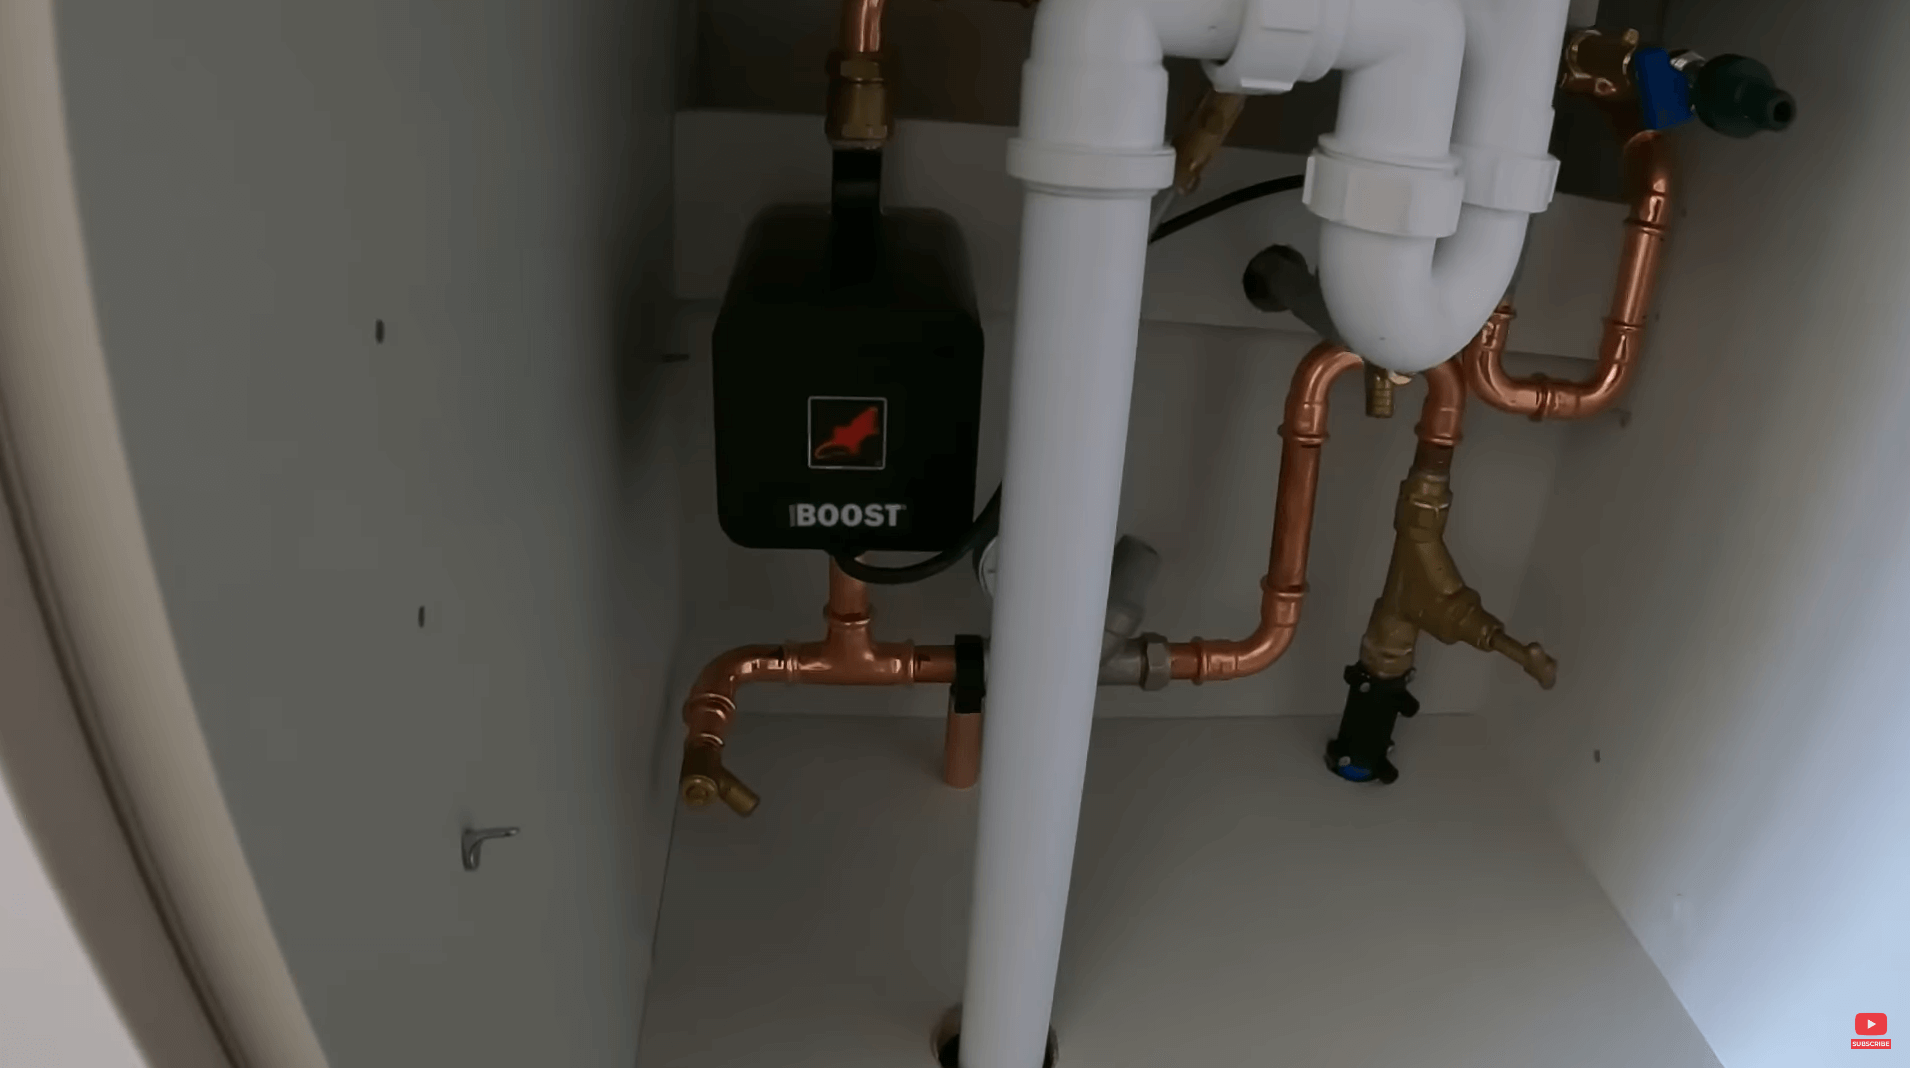 HomeBoost installed